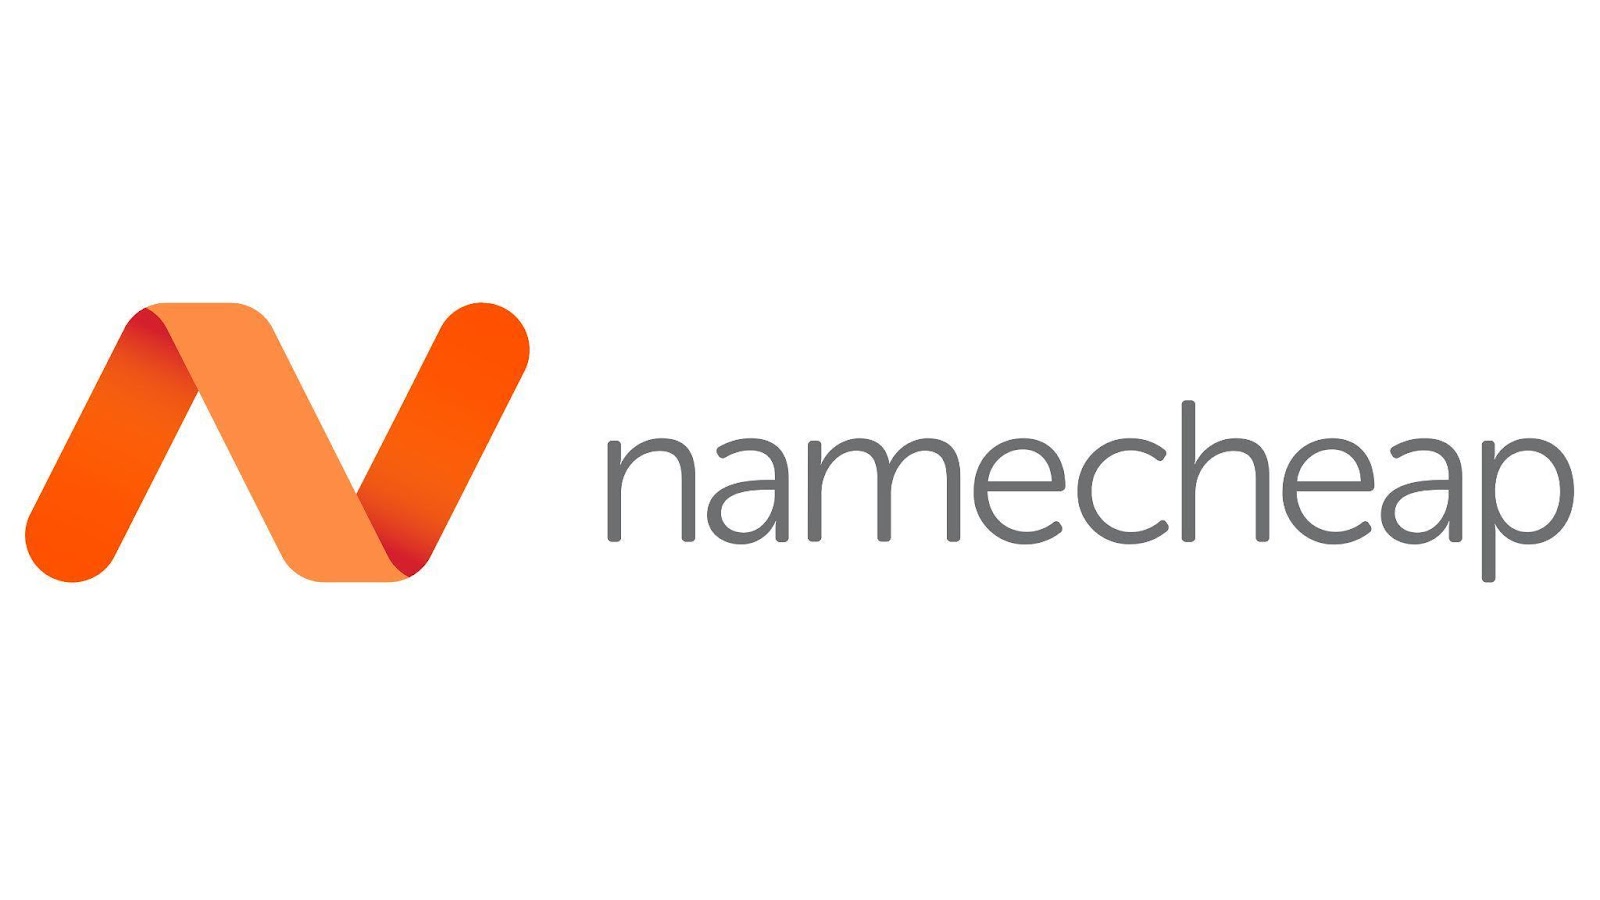 Why Namecheap consider a good web host for websites